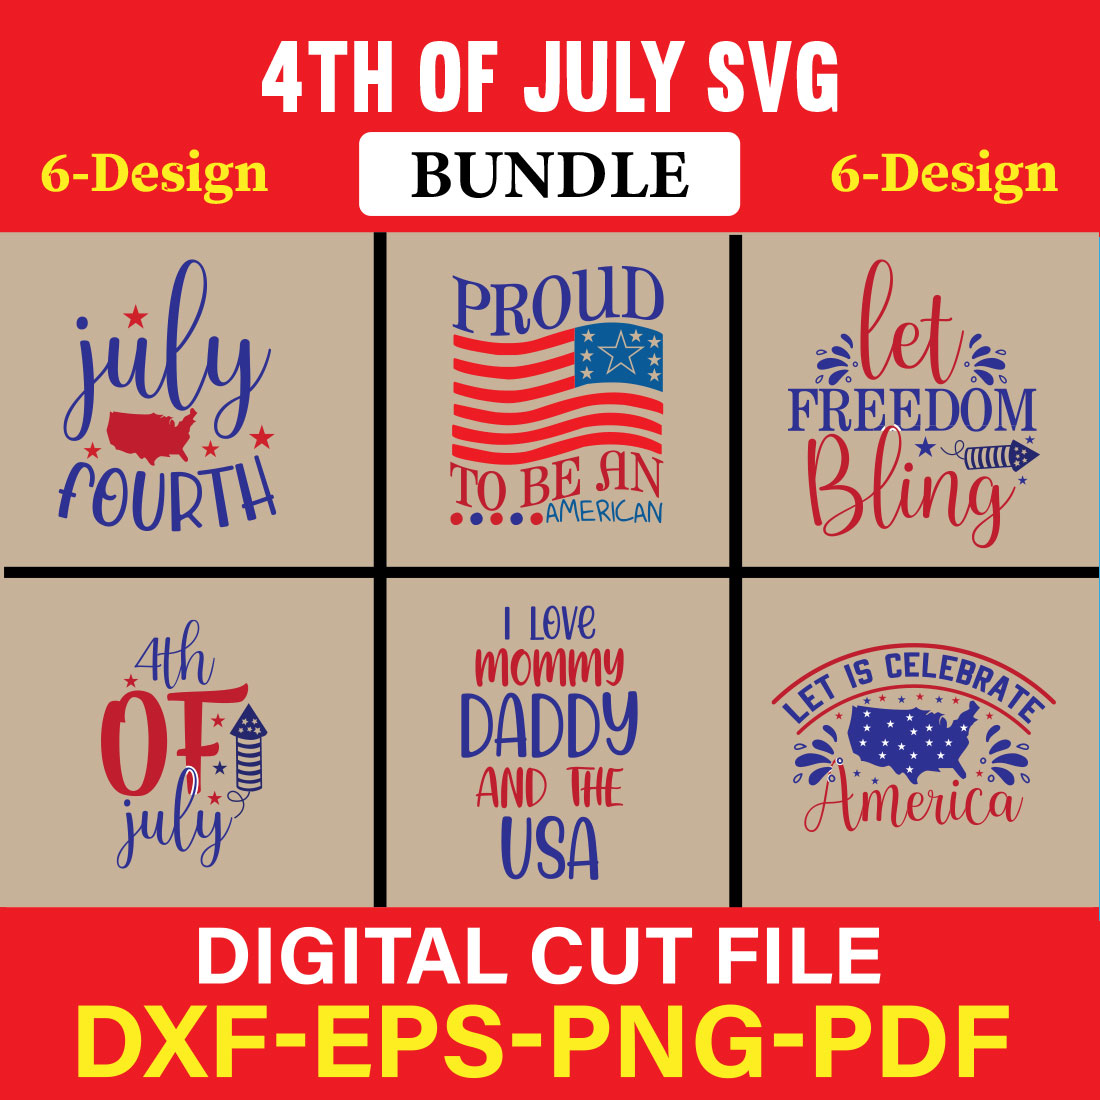 4th of July SVG Bundle, July 4th SVG, Fourth of July SVG Vol-01 cover image.